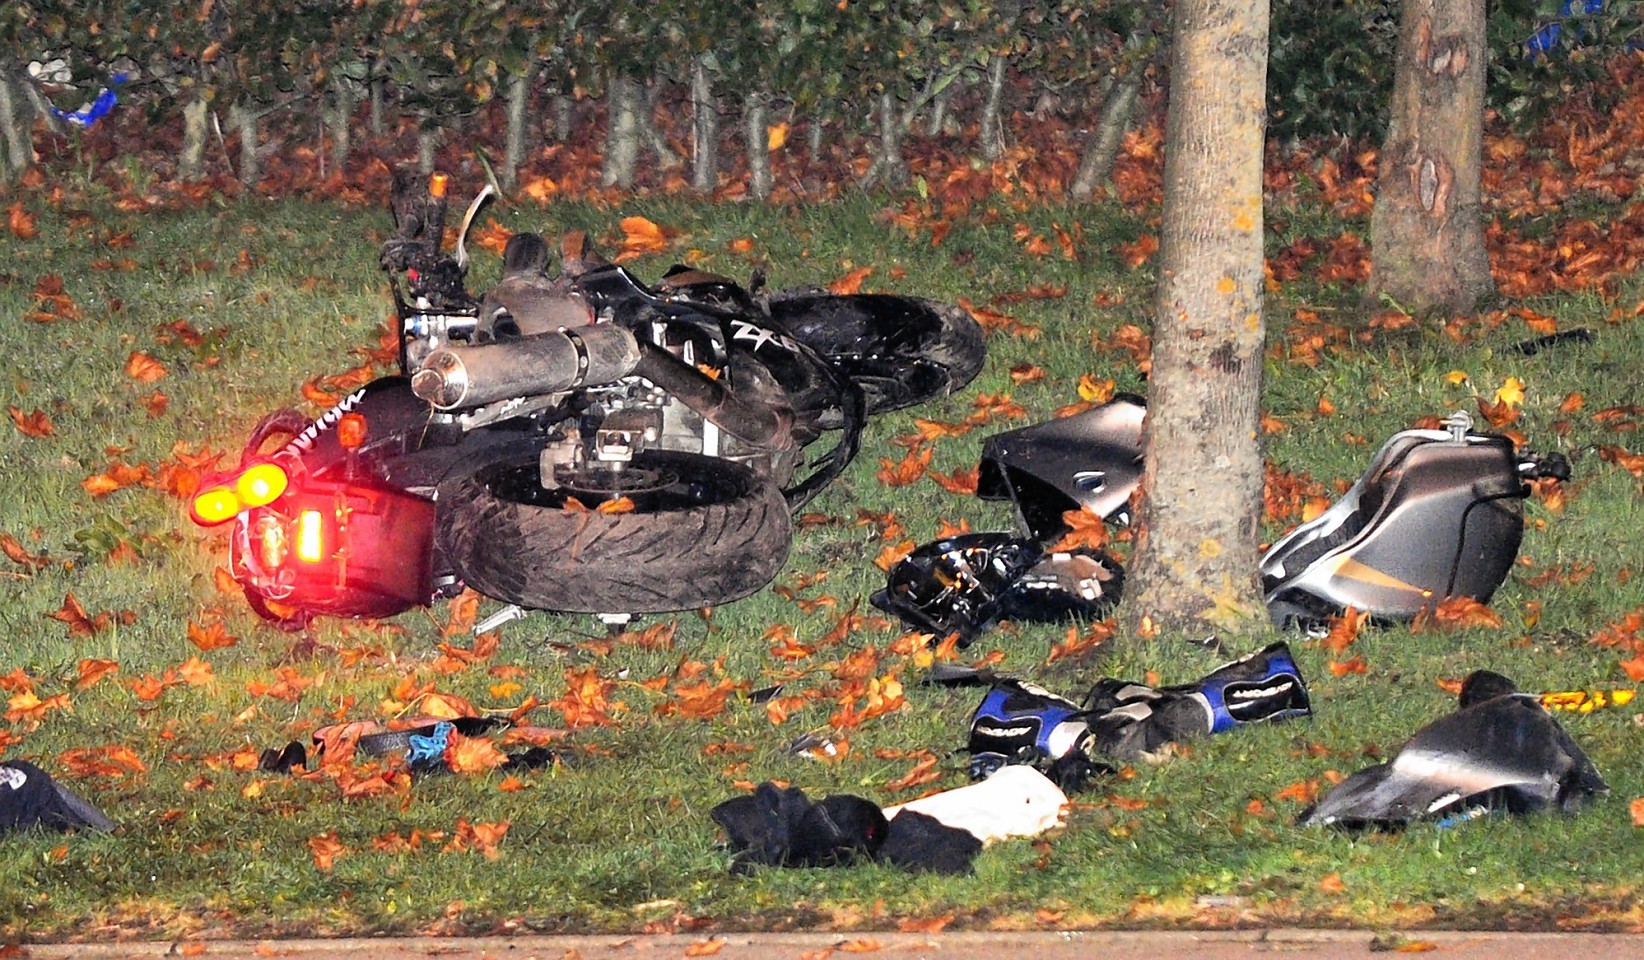 The Kawasaki following the crash near Altens. Credit: Kevin Emslie.